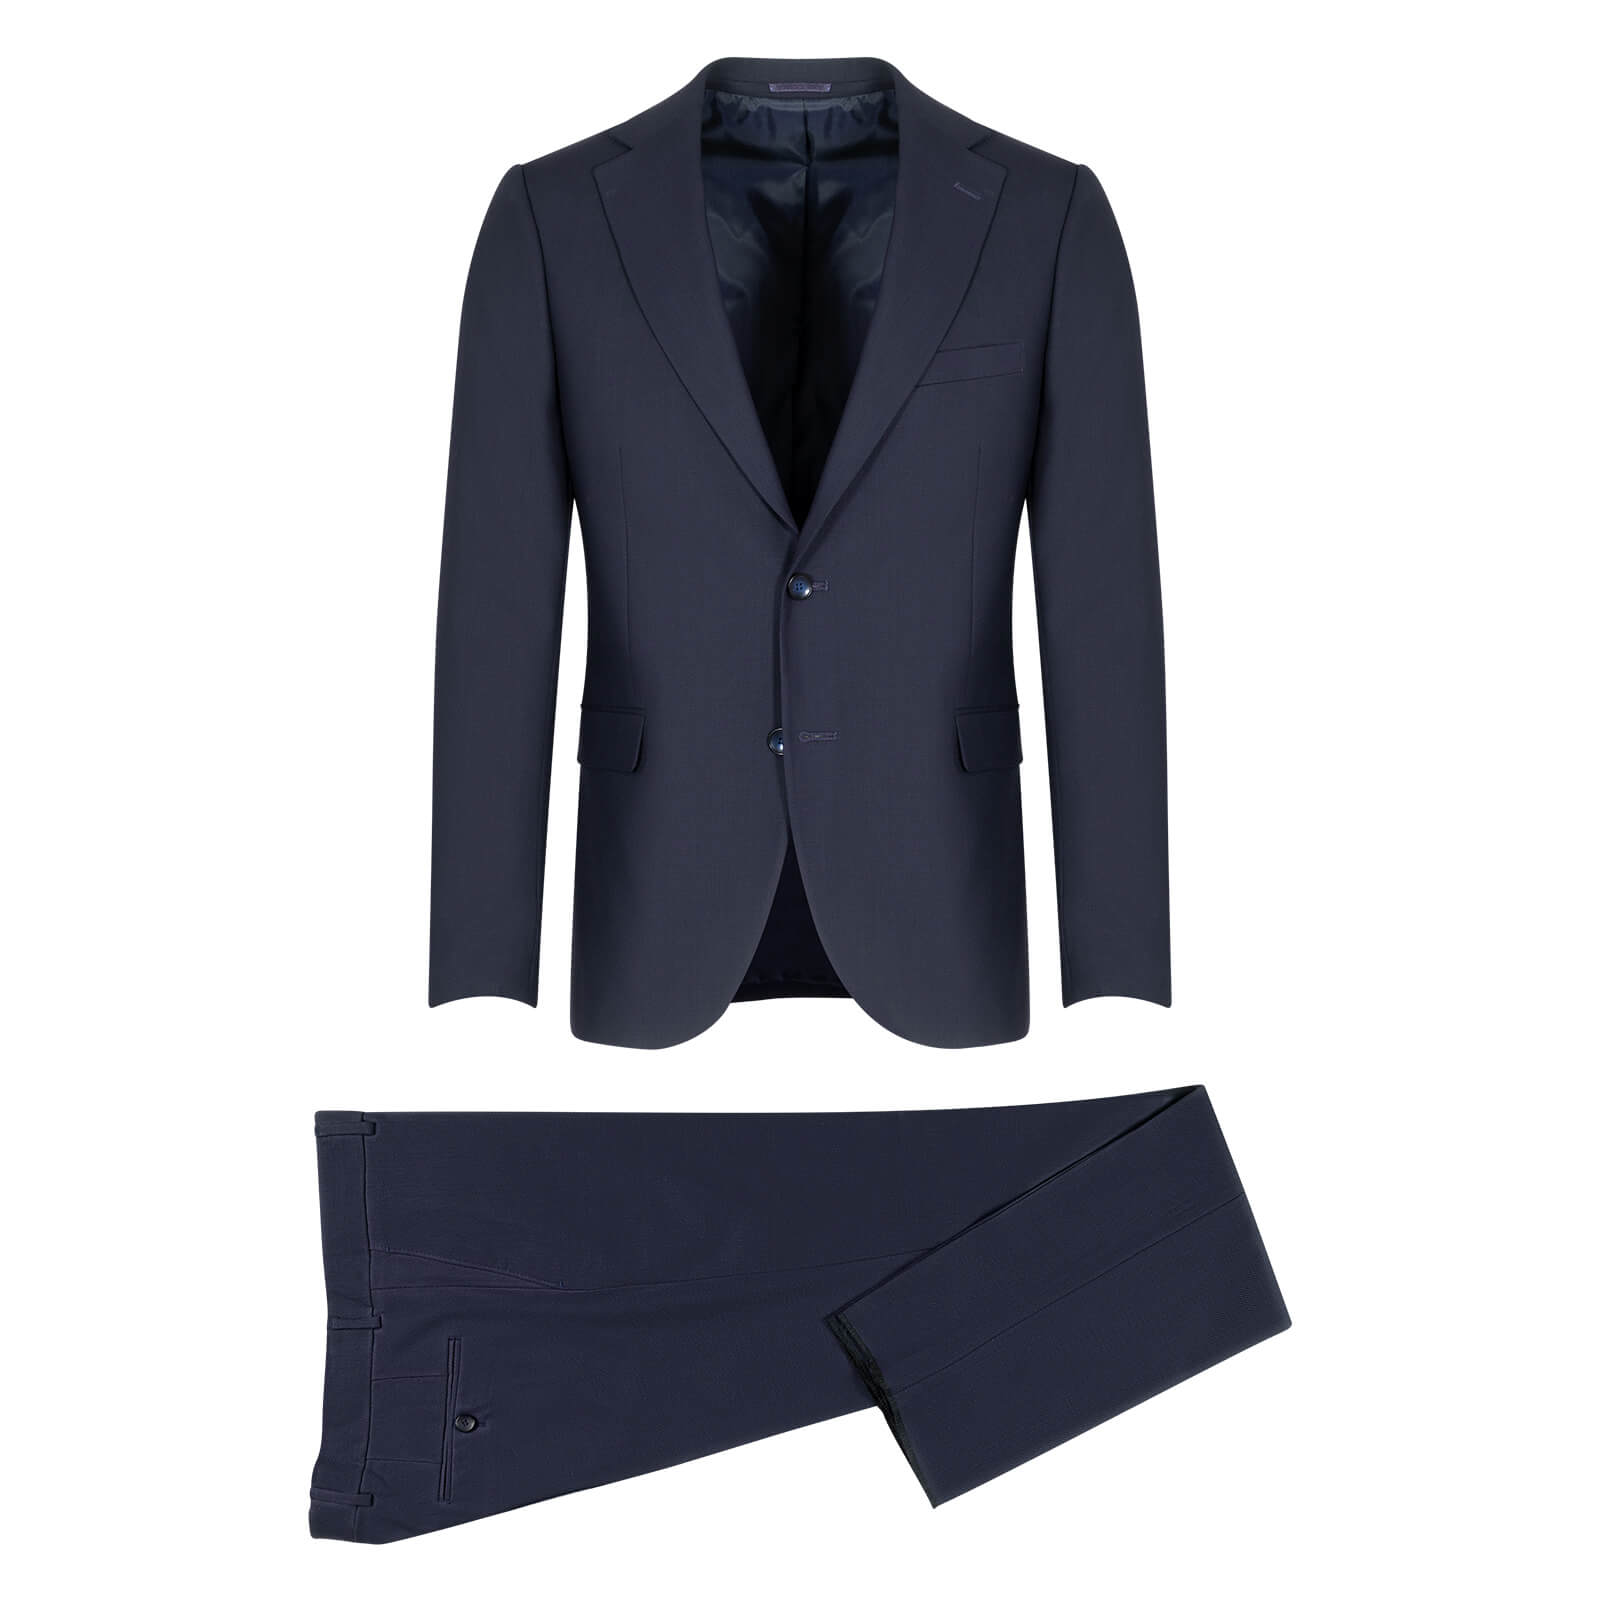 Prince Oliver Κοστούμι Μπλε με Μικροσχέδιο 100% Wool Super 120s (Modern Fit)